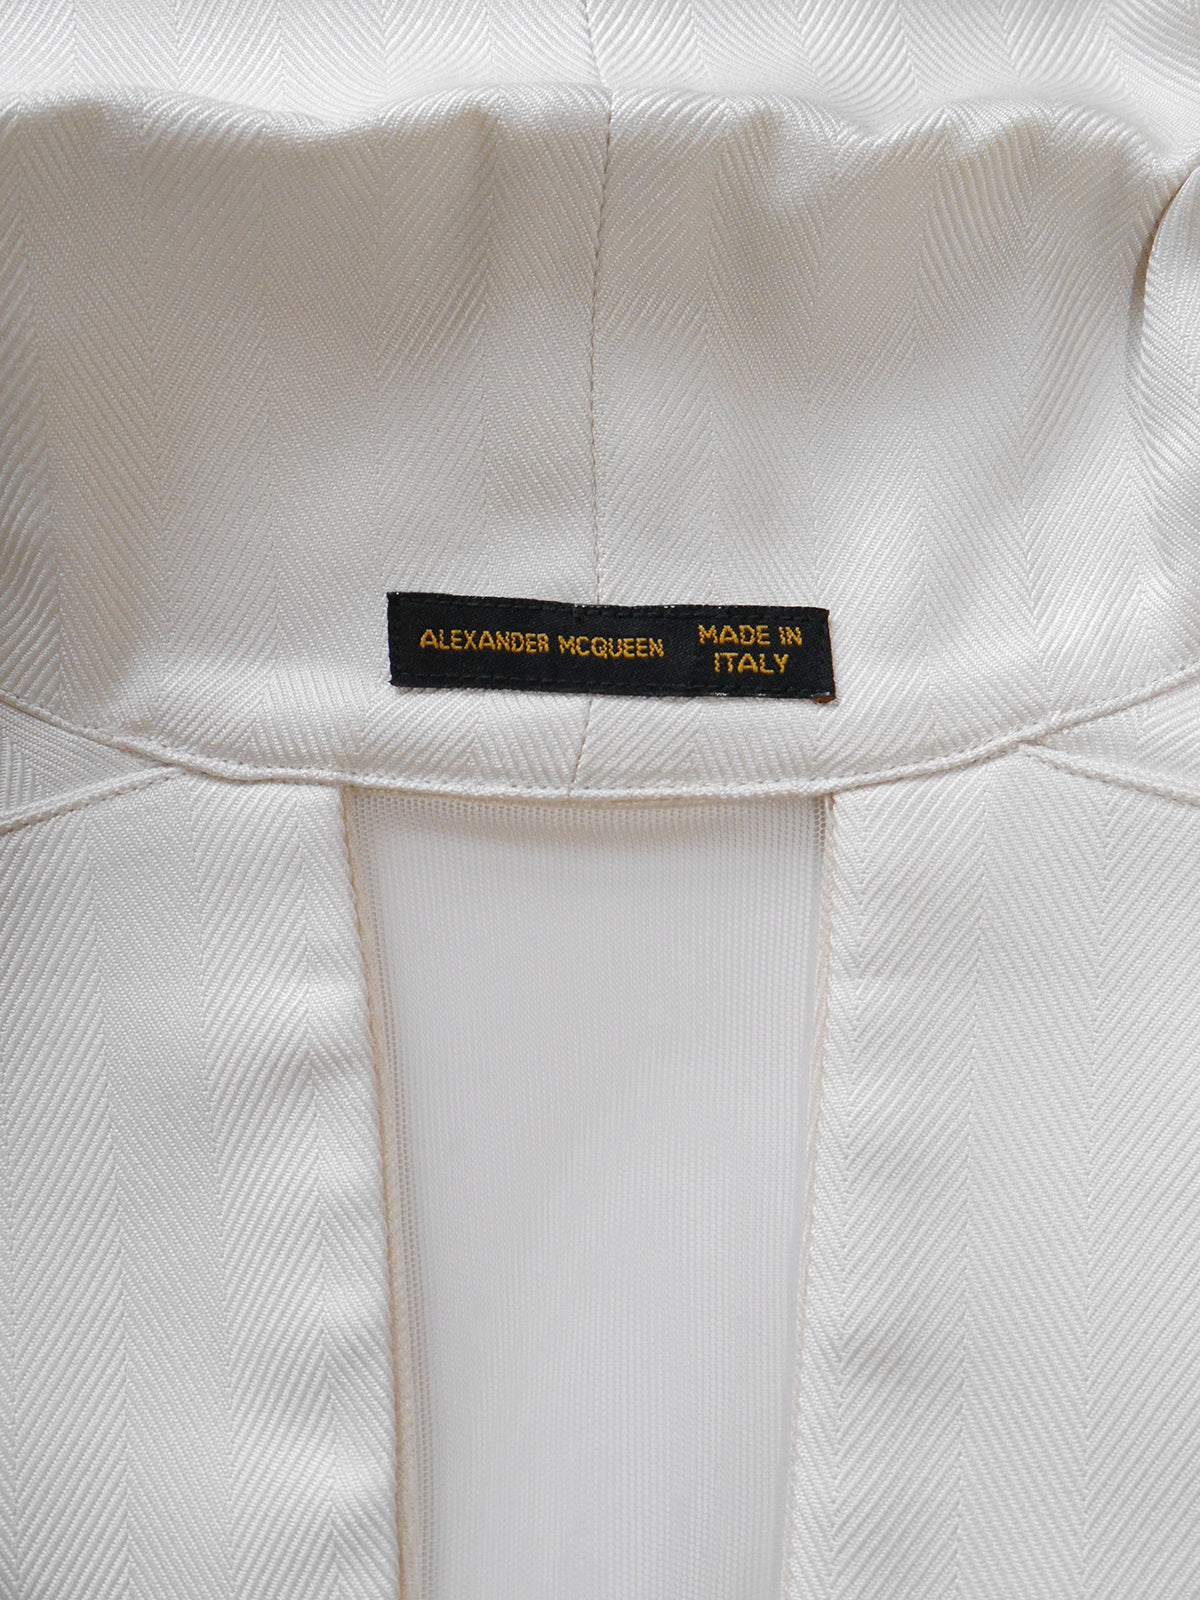 ALEXANDER MCQUEEN Spring 1999 Vintage Sculpted Silk Jacket Mesh Cut-Out